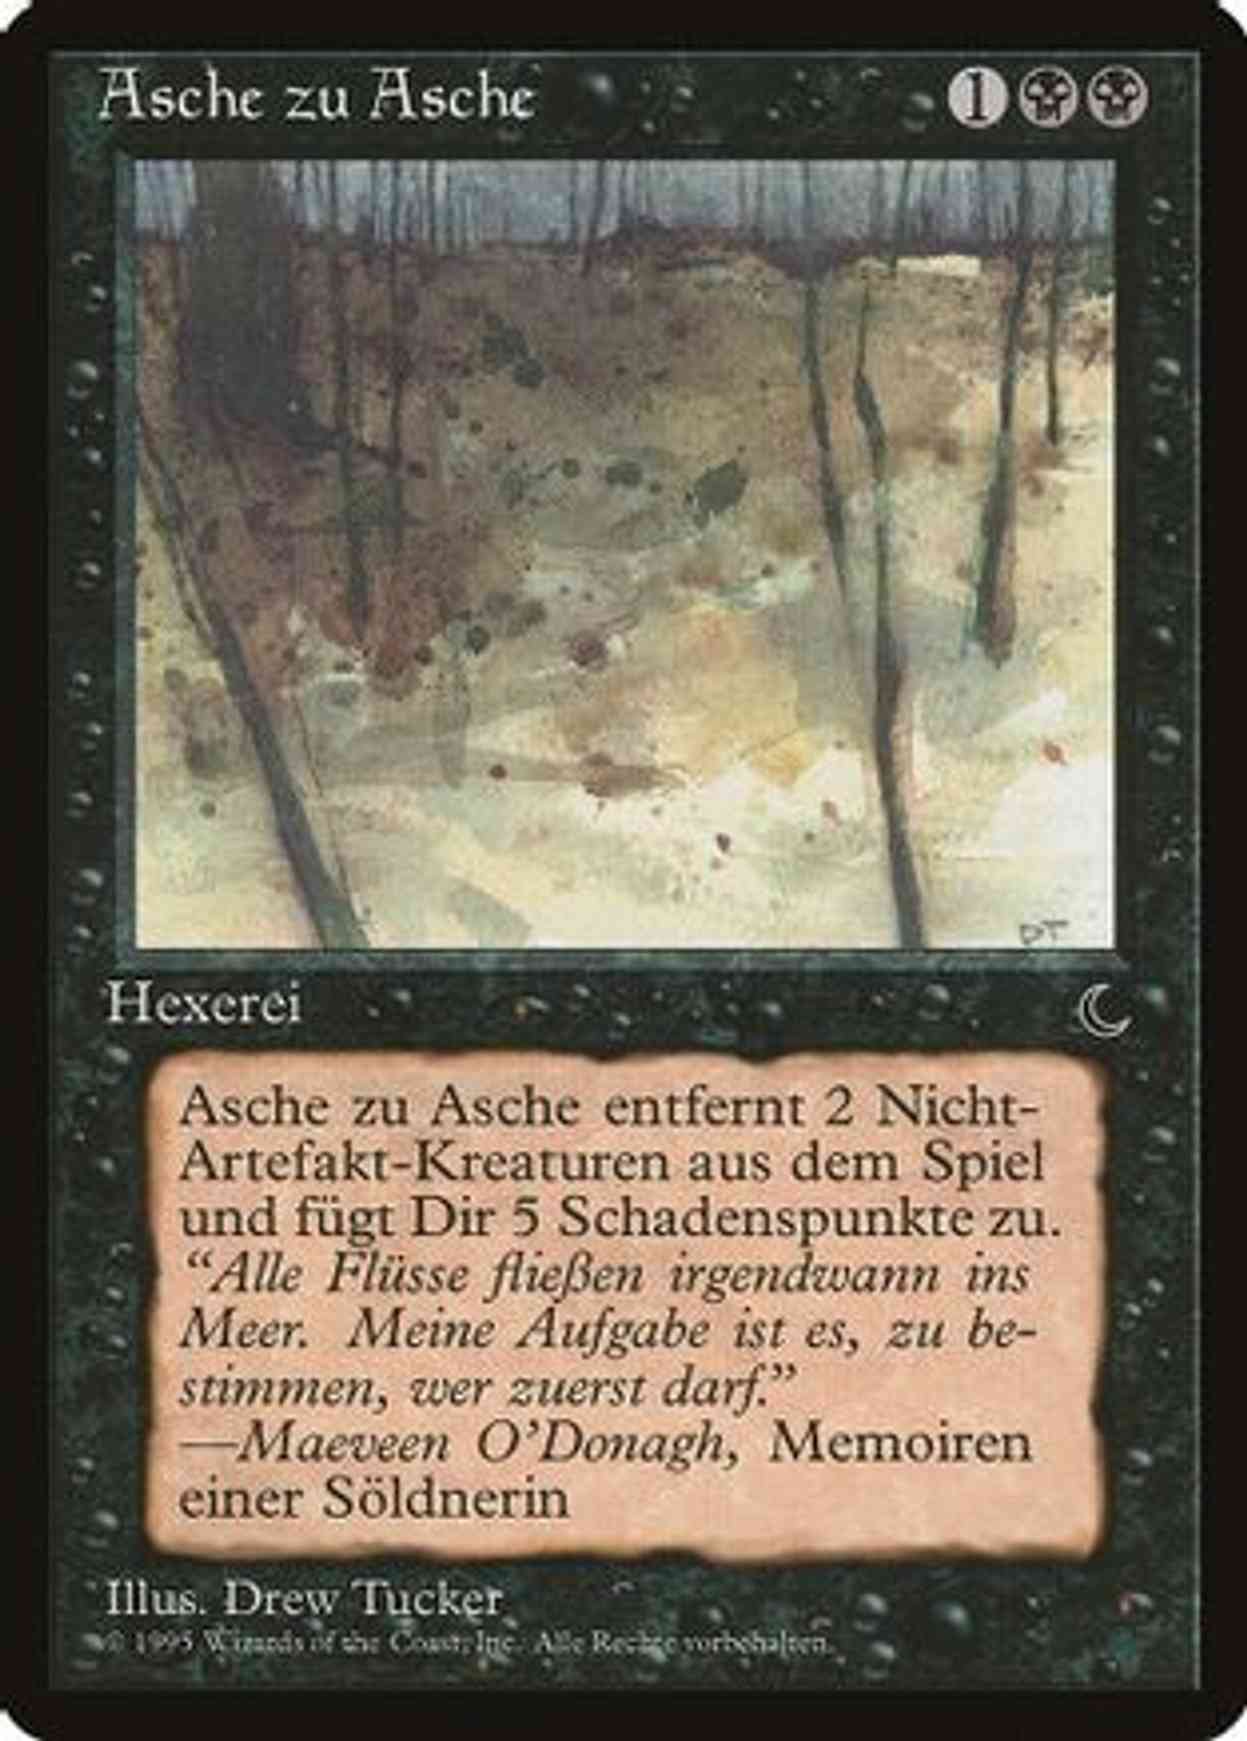 Ashes to Ashes (German) - "Asche zu Asche" magic card front